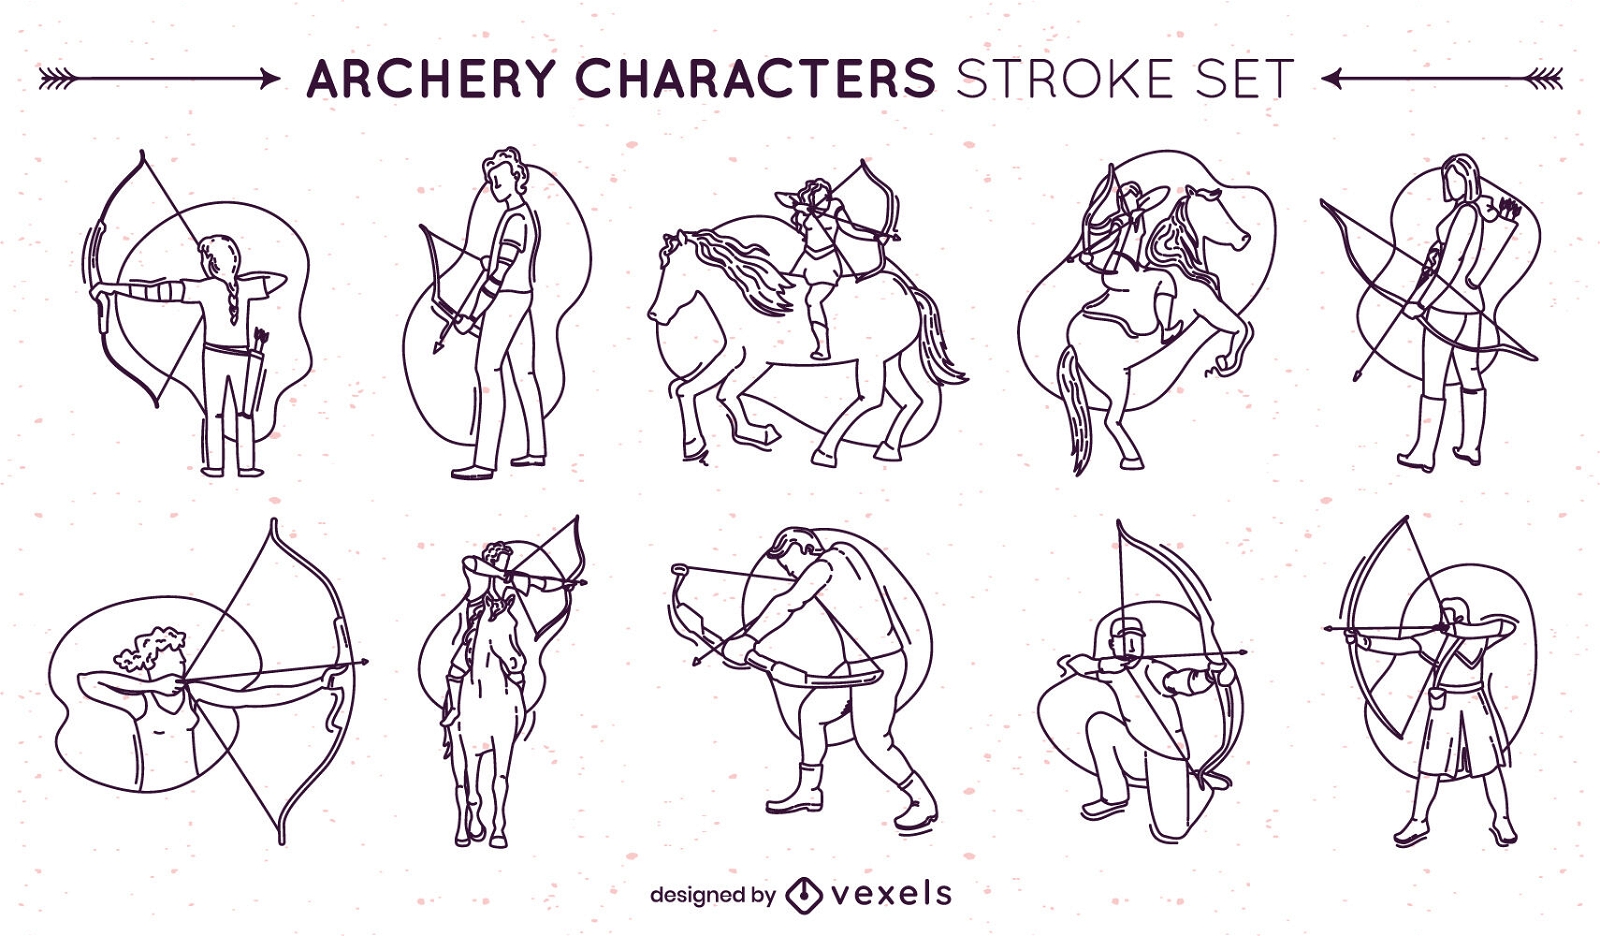 Archery characters stroke set